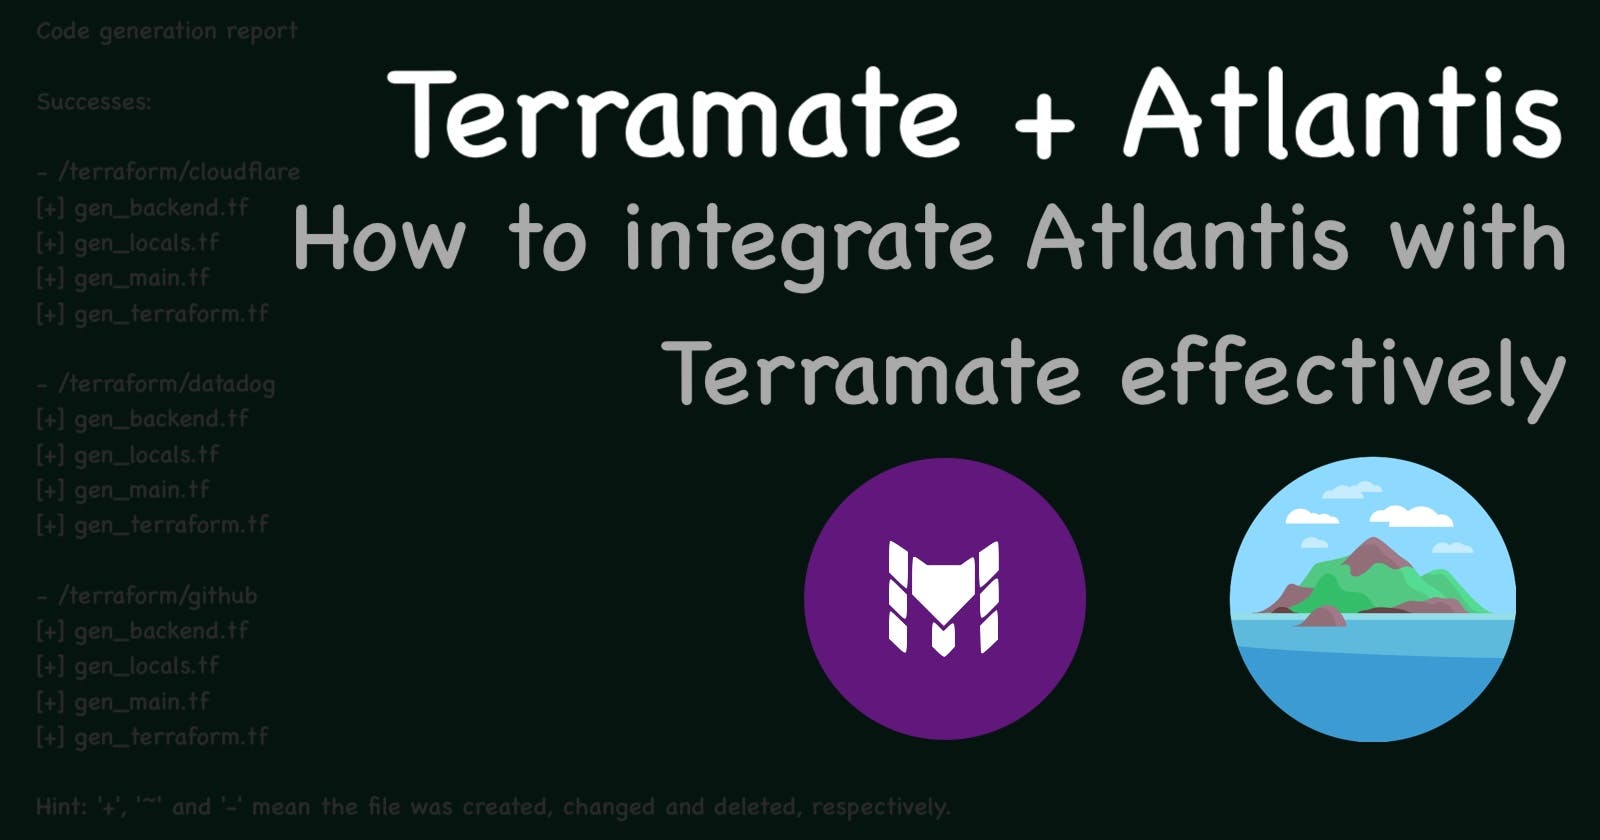 Terramate meets Atlantis 🚀